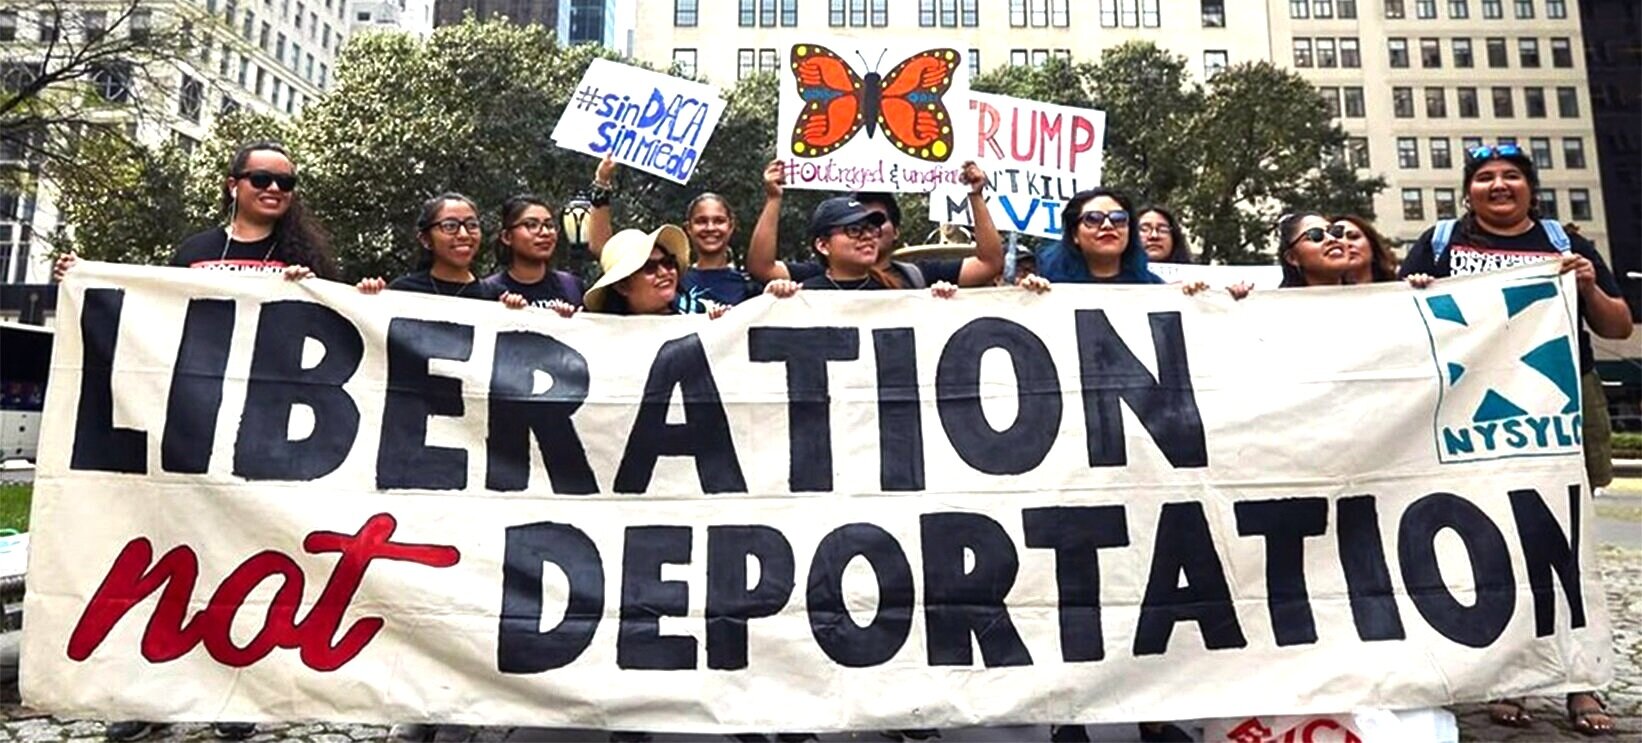 Liberation_not_deportation_banner_cropped.jpg